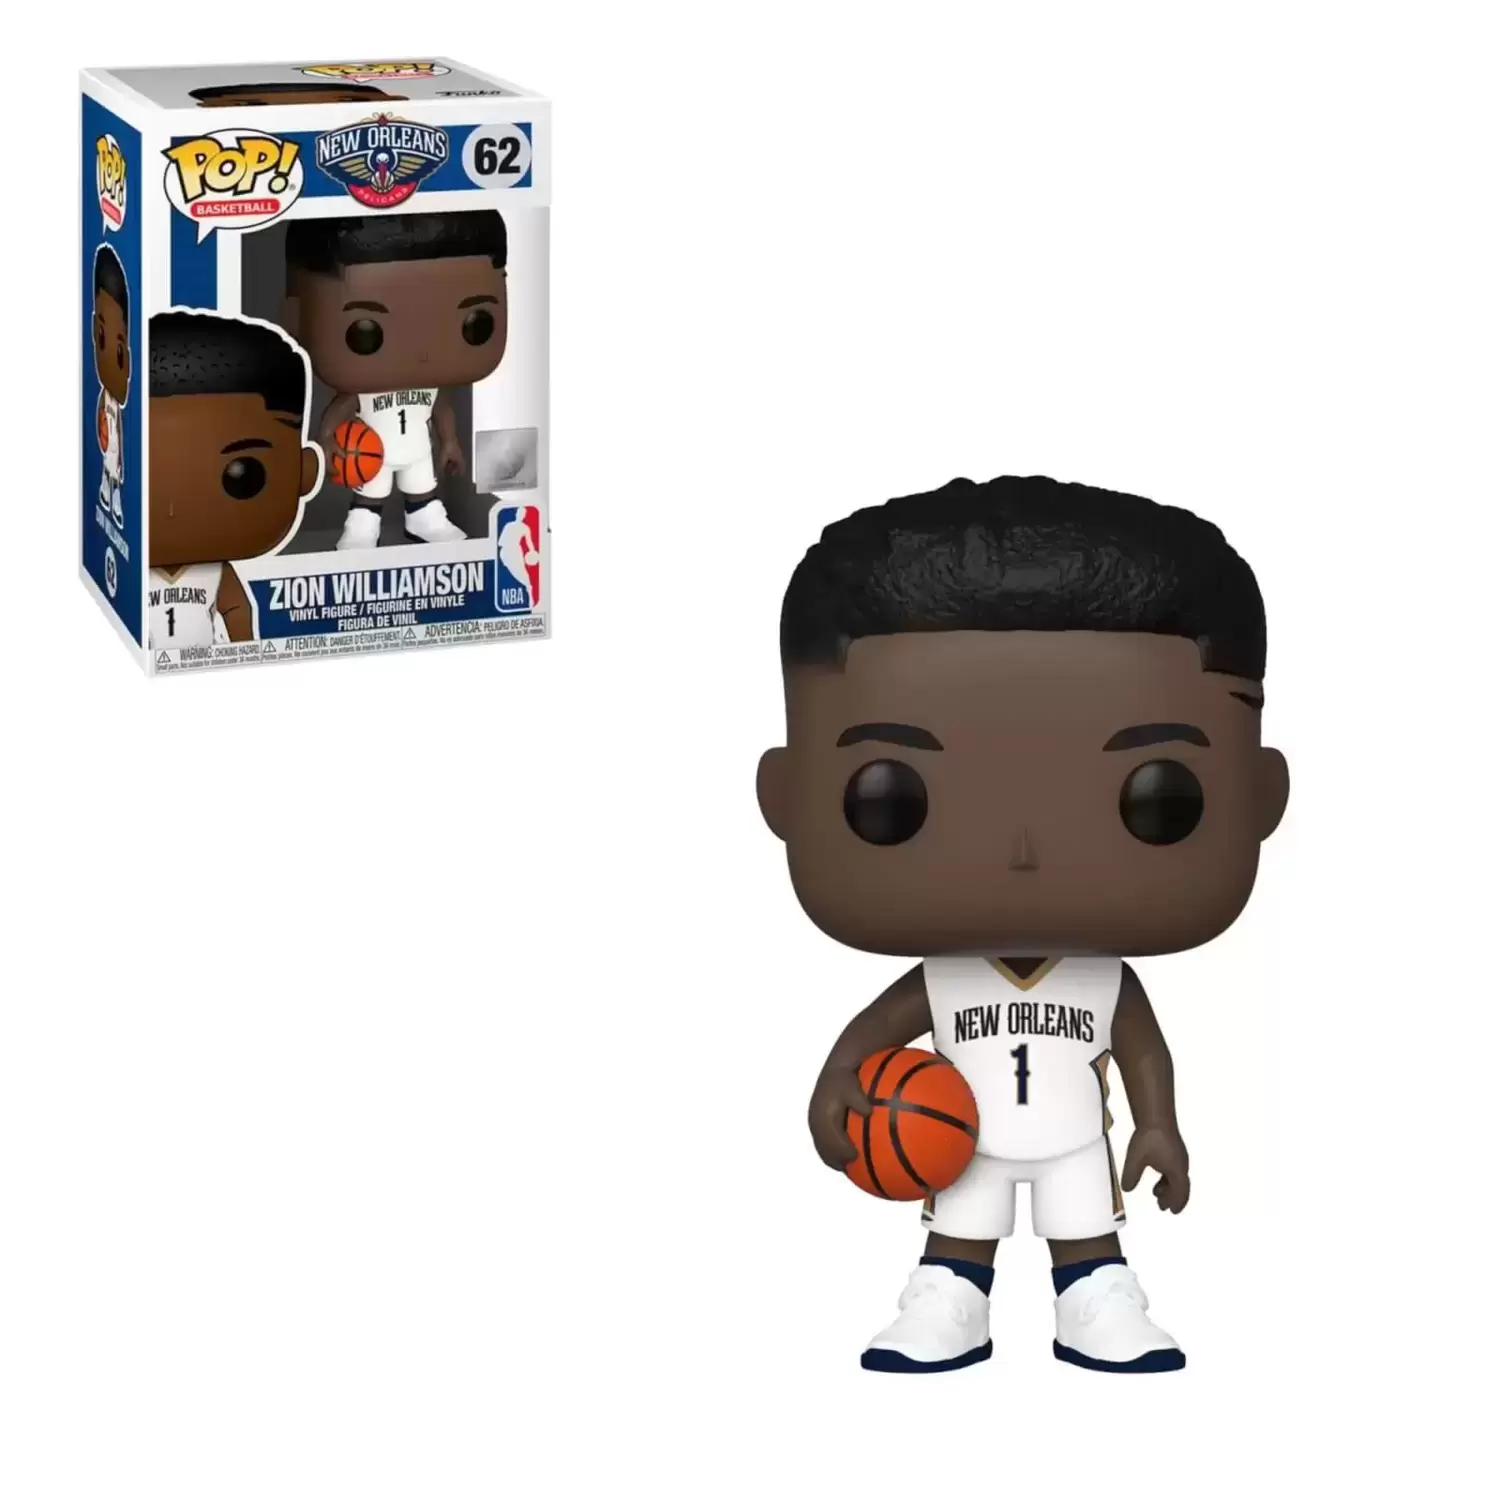 POP! Sports/Basketball - New Orleans - Zion Williamson